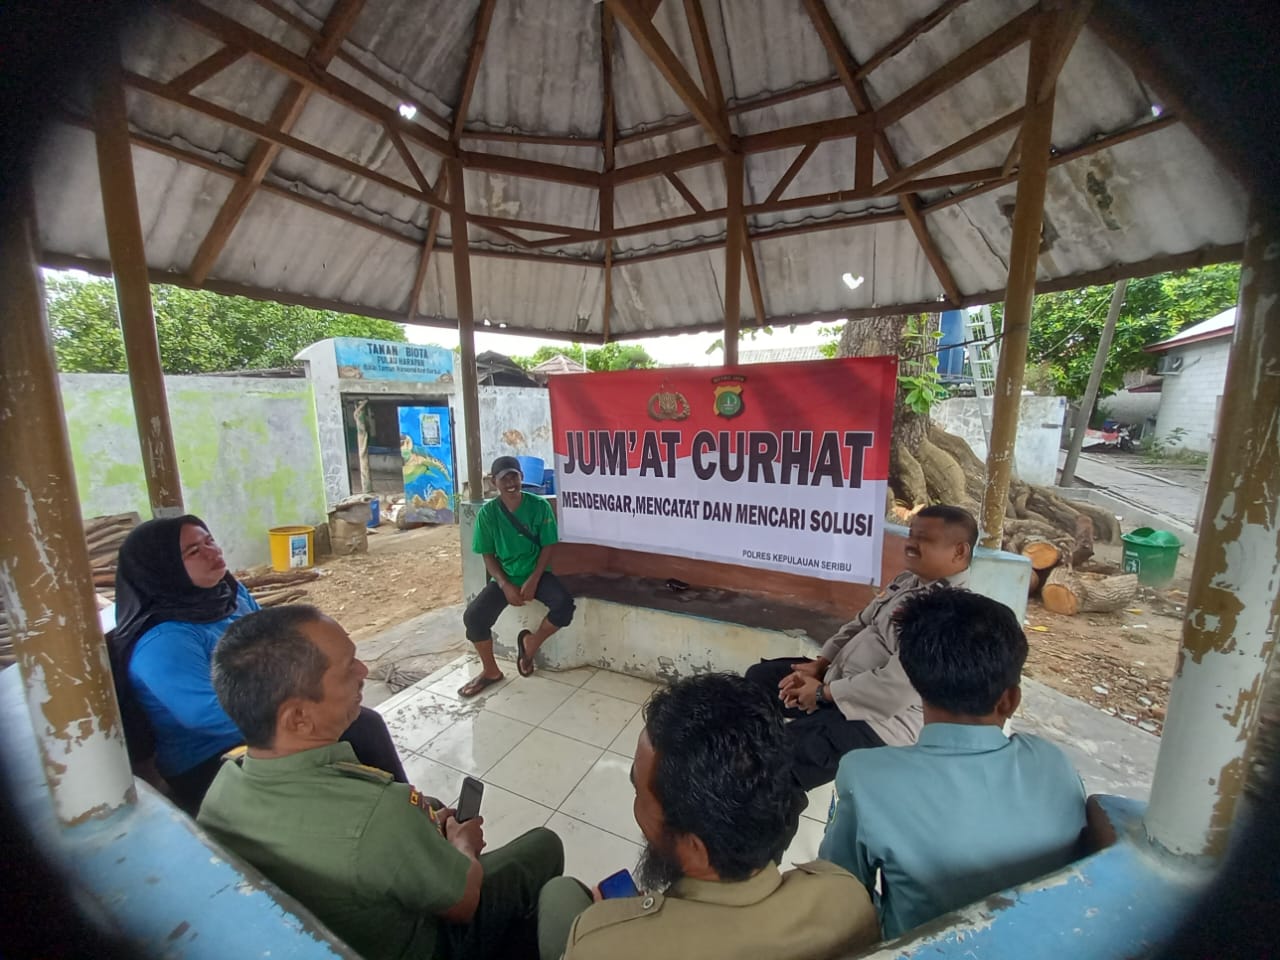 Bhabinkamtibmas Pulau Harapan Gencar Lakukan Jumat Curhat, Tindaklanjuti Keluhan Masyarakat untuk Perbaiki Kamtibmas